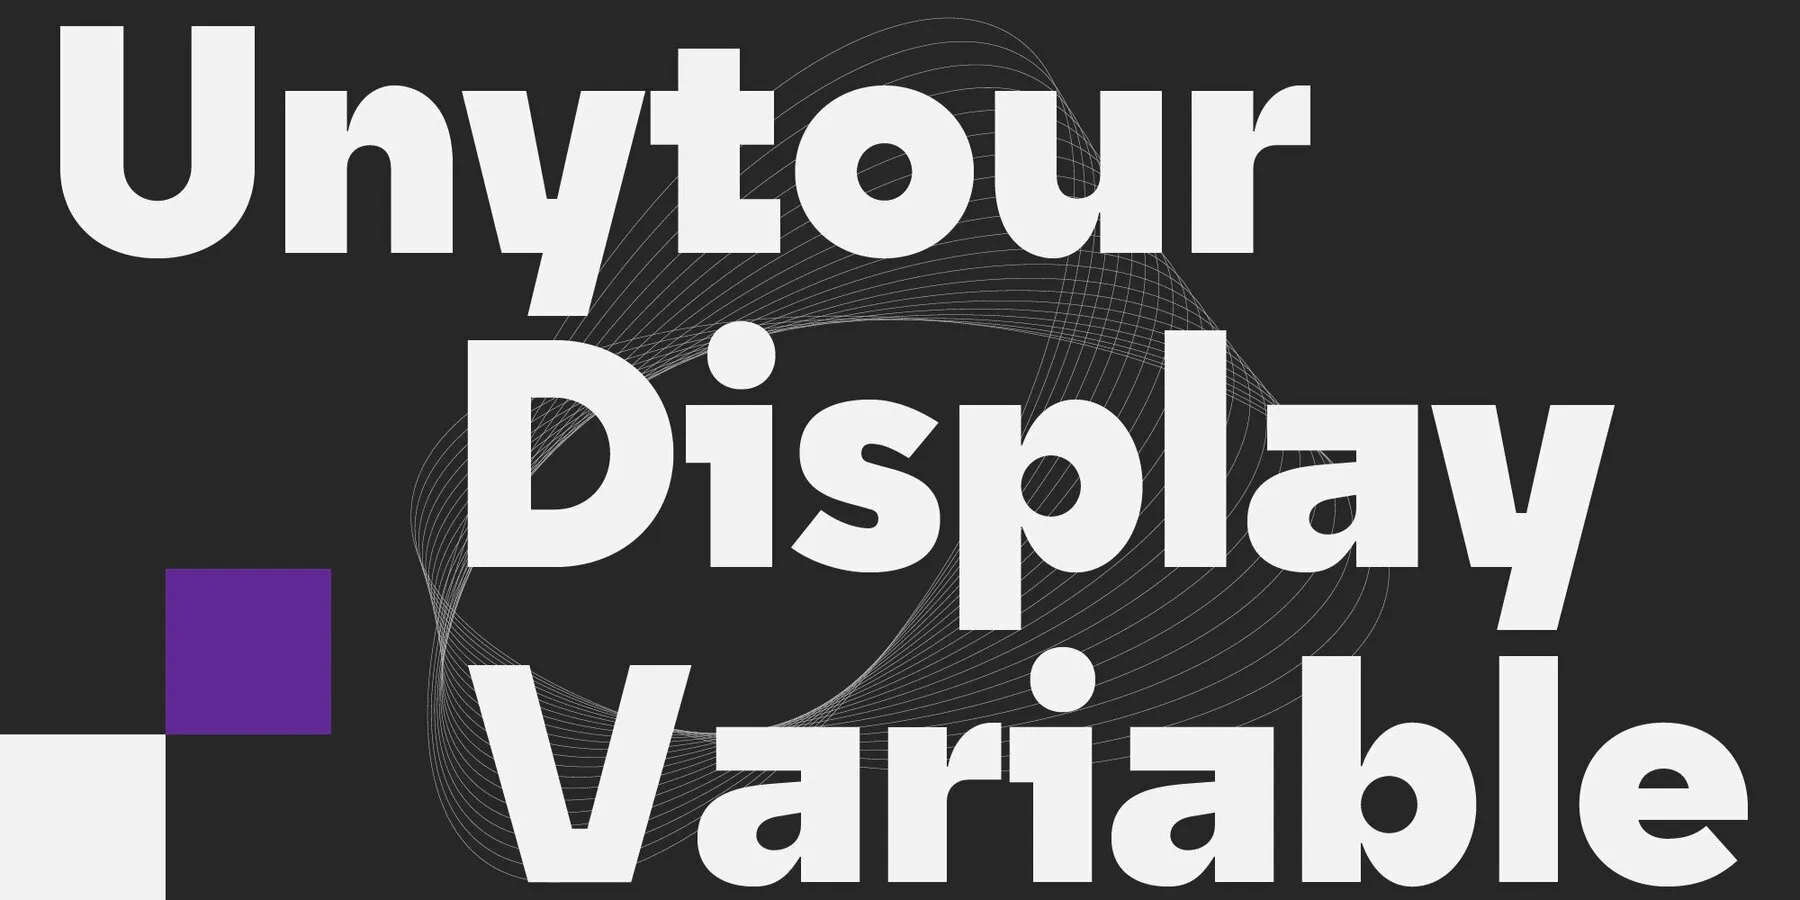 Unytour Display Variable